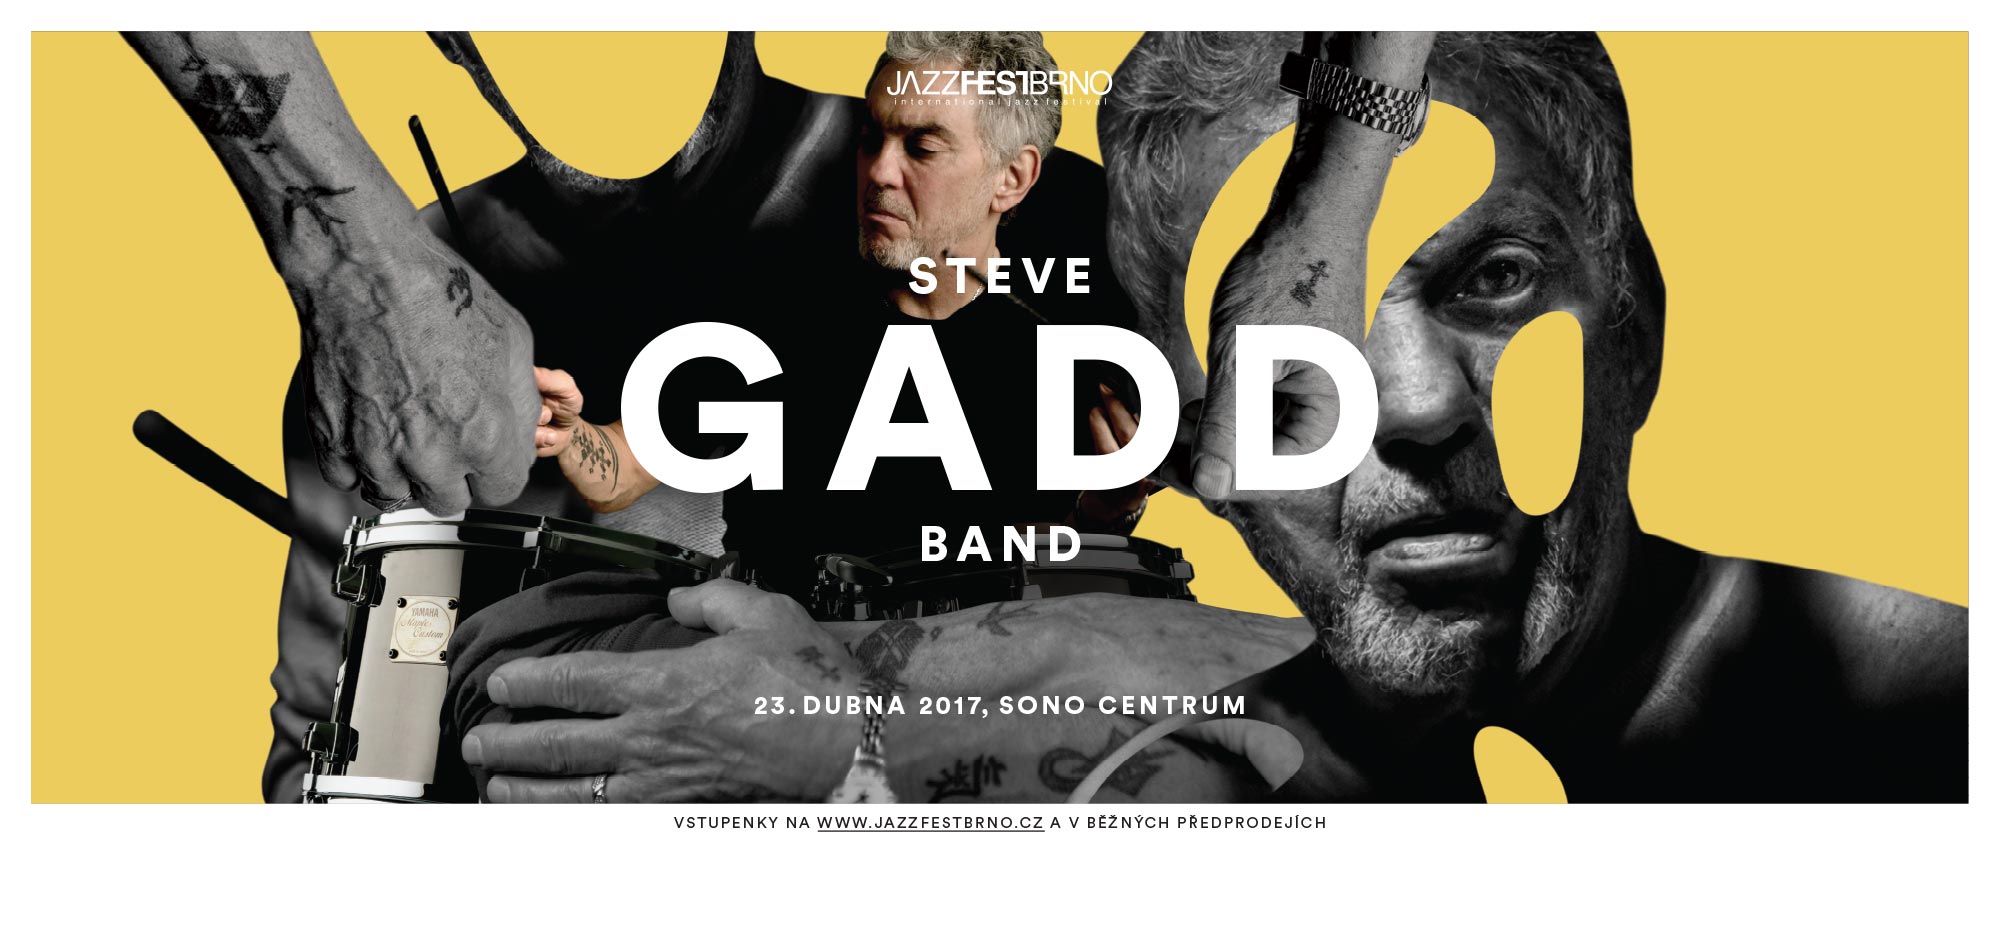 Jazzfestbrno 2017 - Steve Gadd